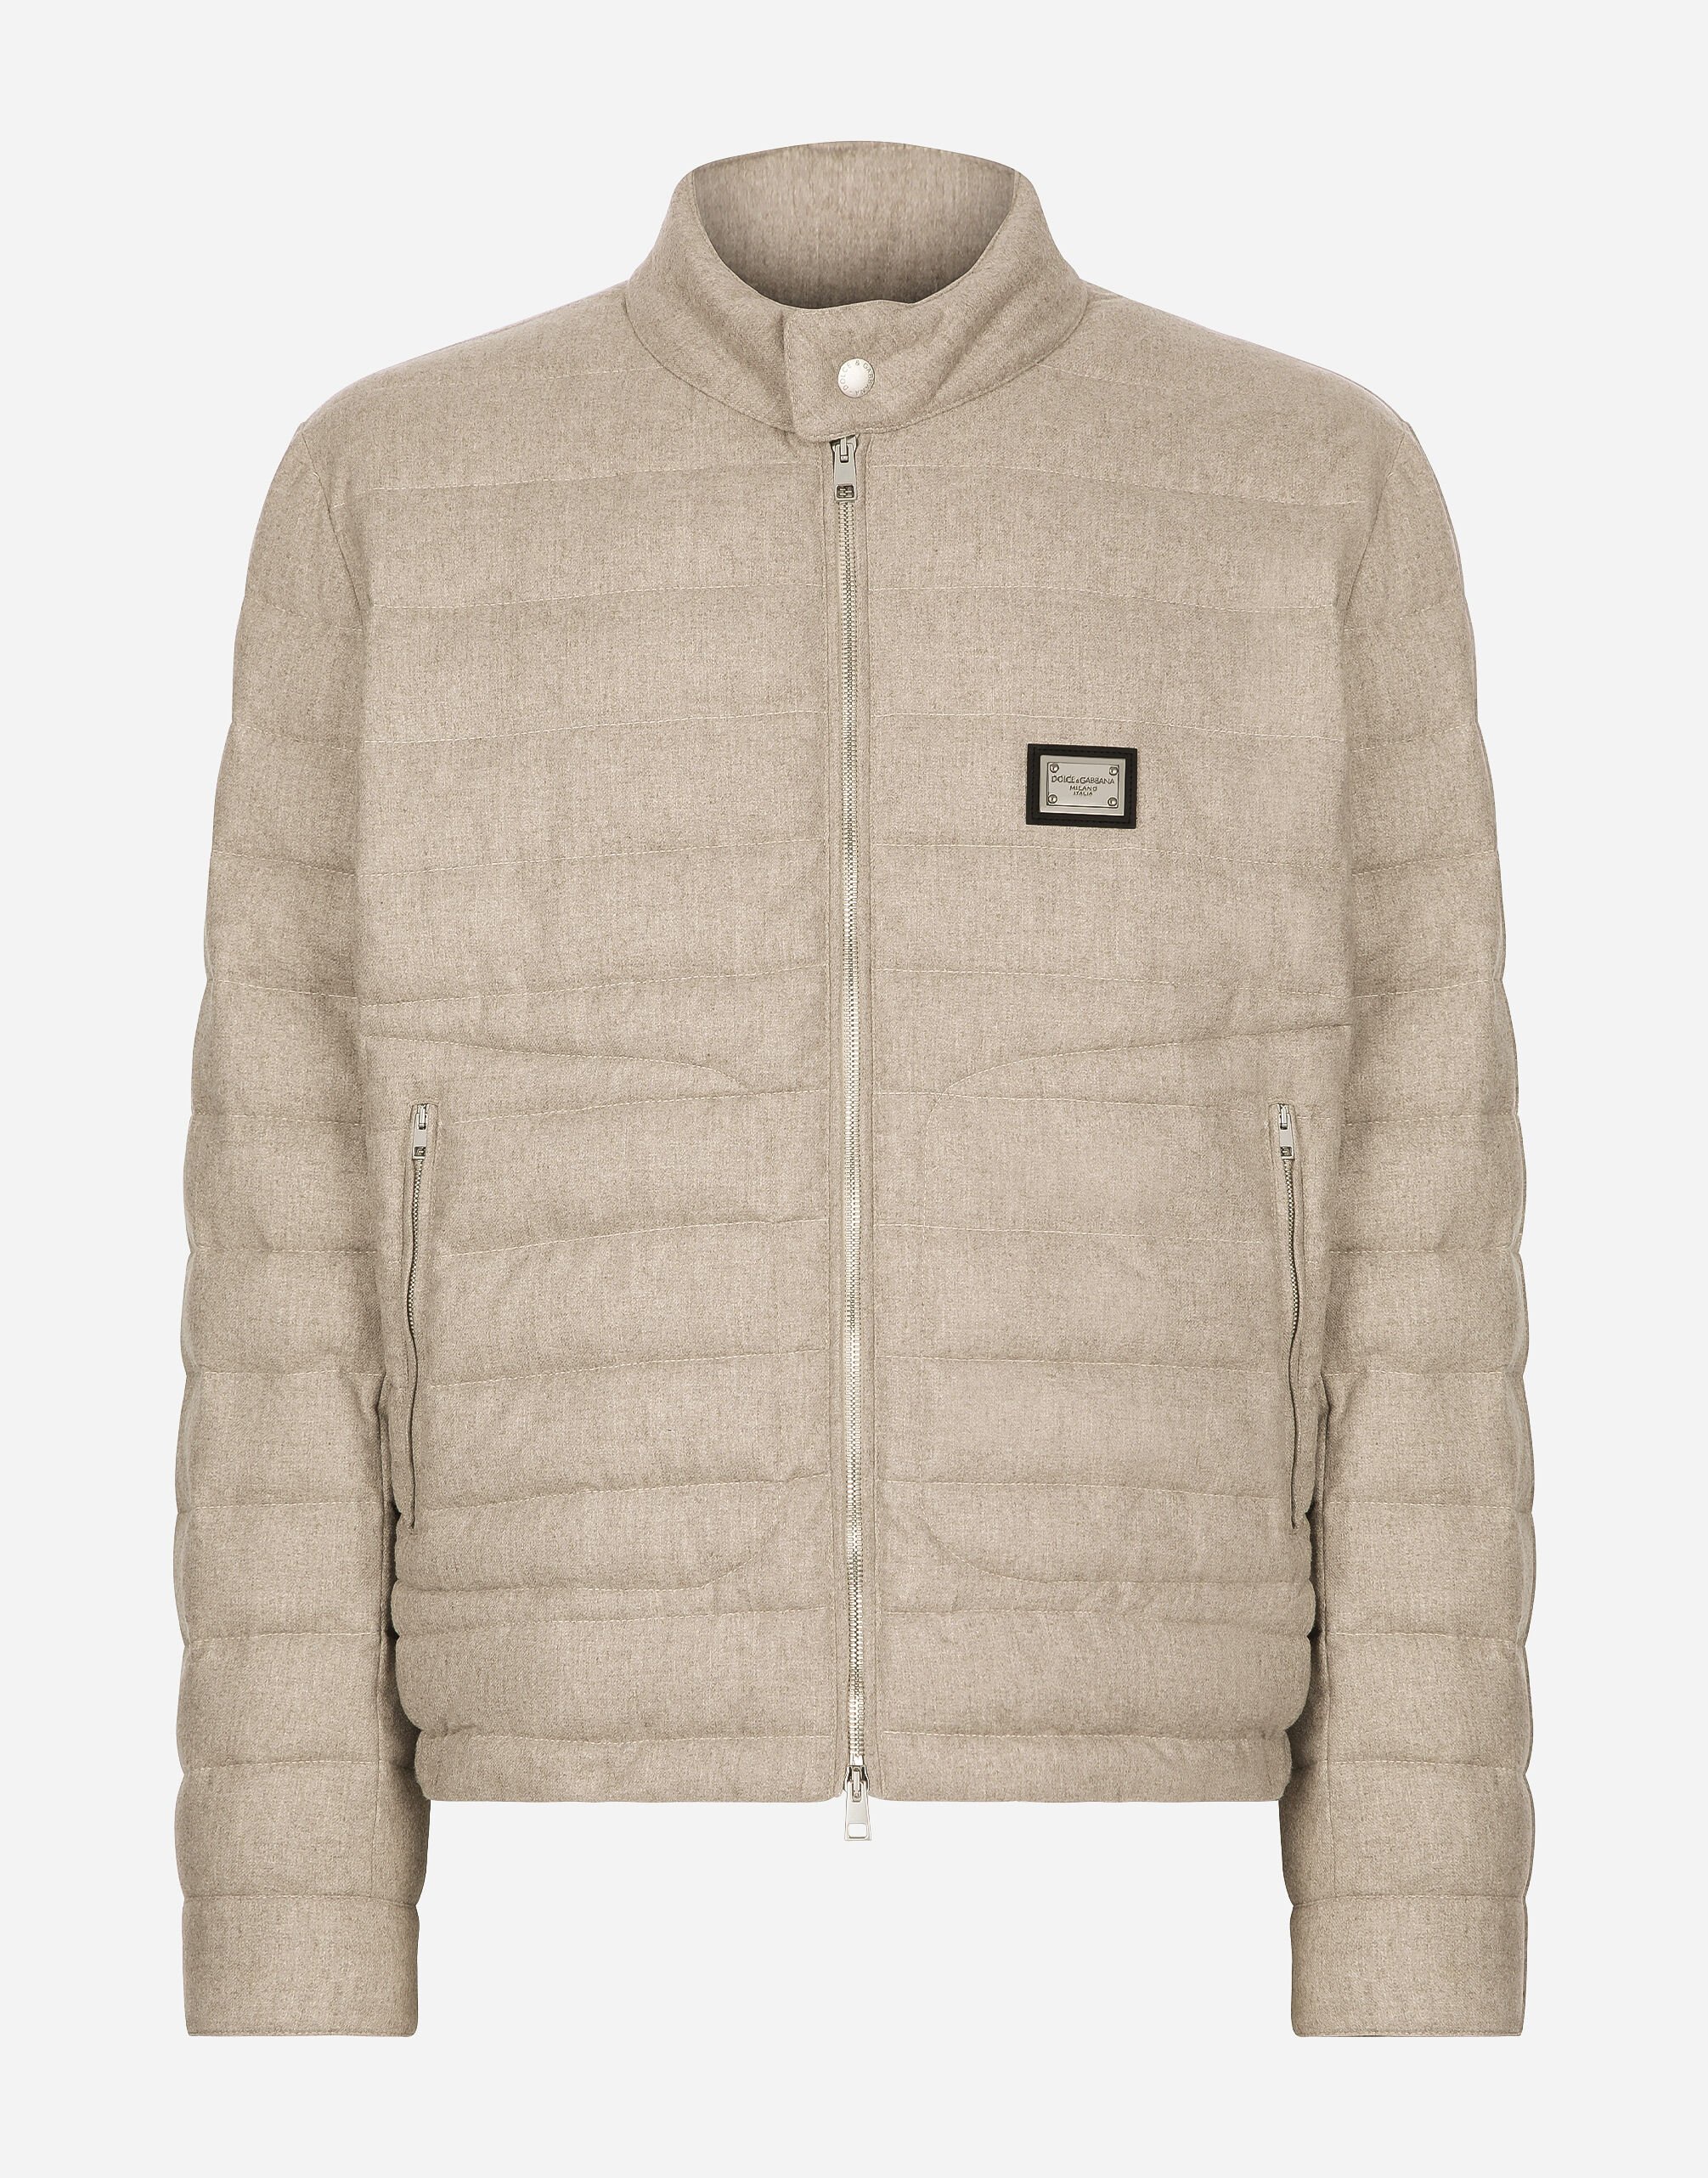 Dolce & Gabbana Quilted cashmere jacket Print G9AZDTFS6N5